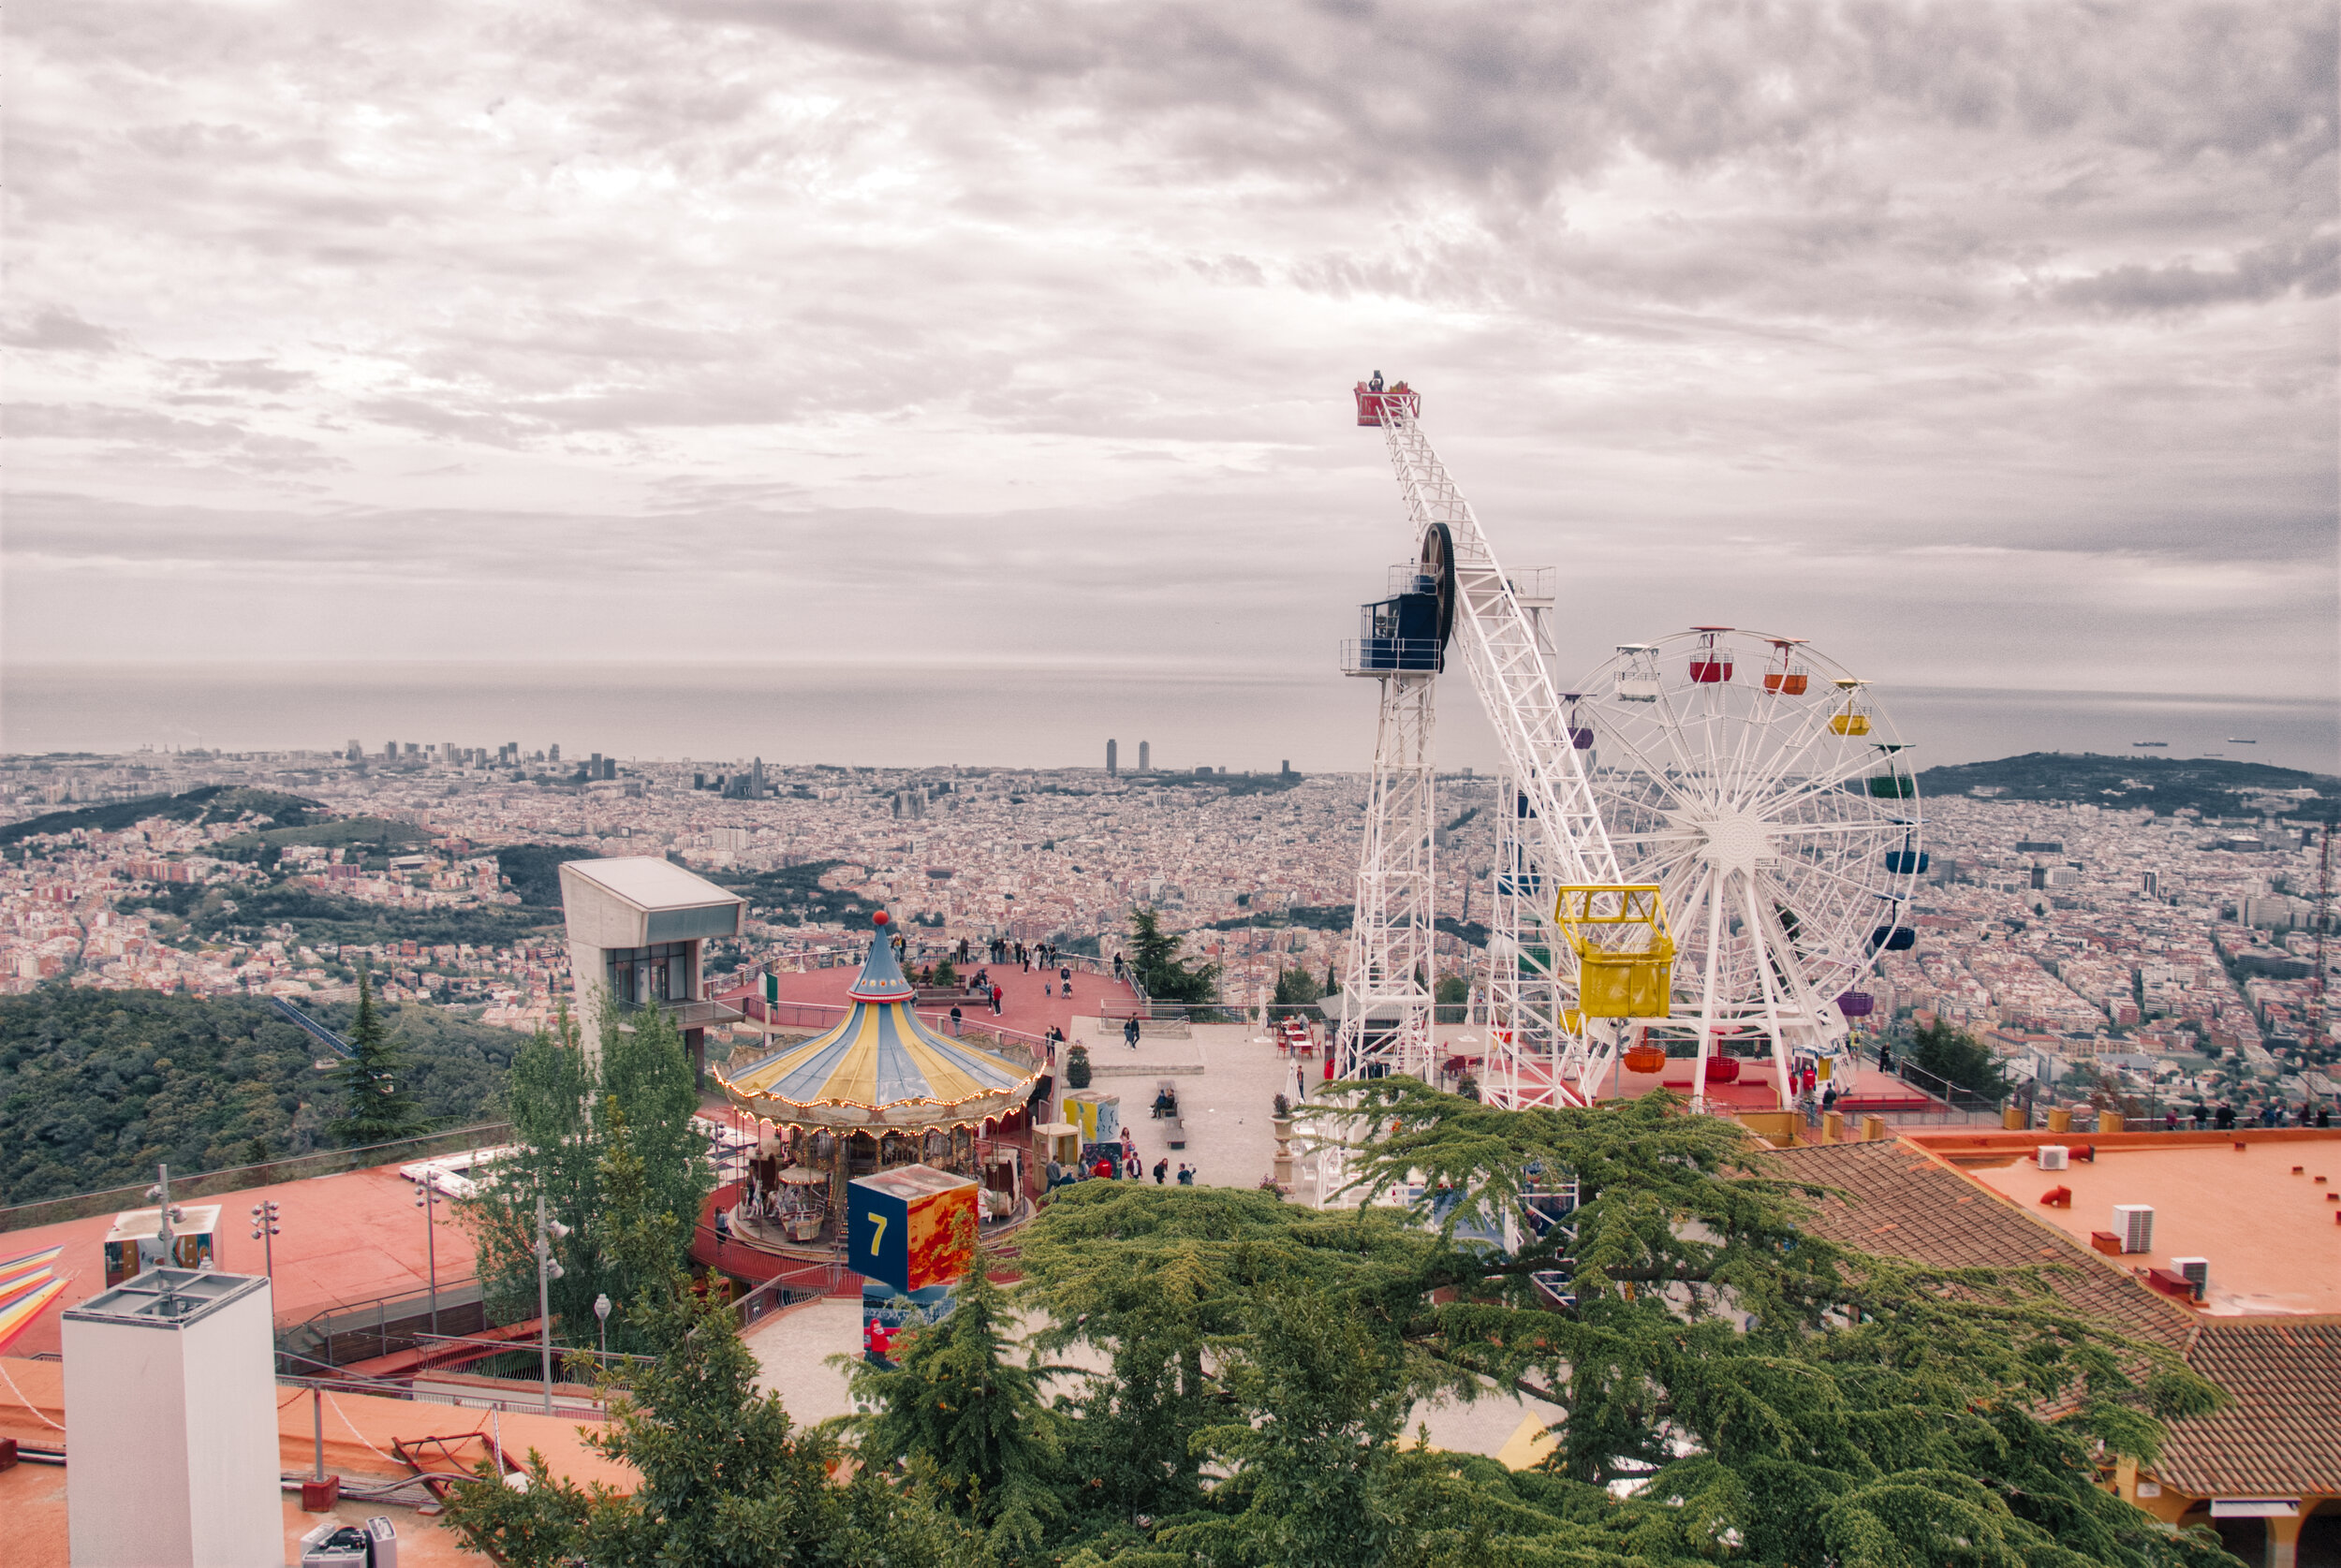  Ride a retro Ferris Wheel with a view of Barcelona at Tibidabo amusement park 